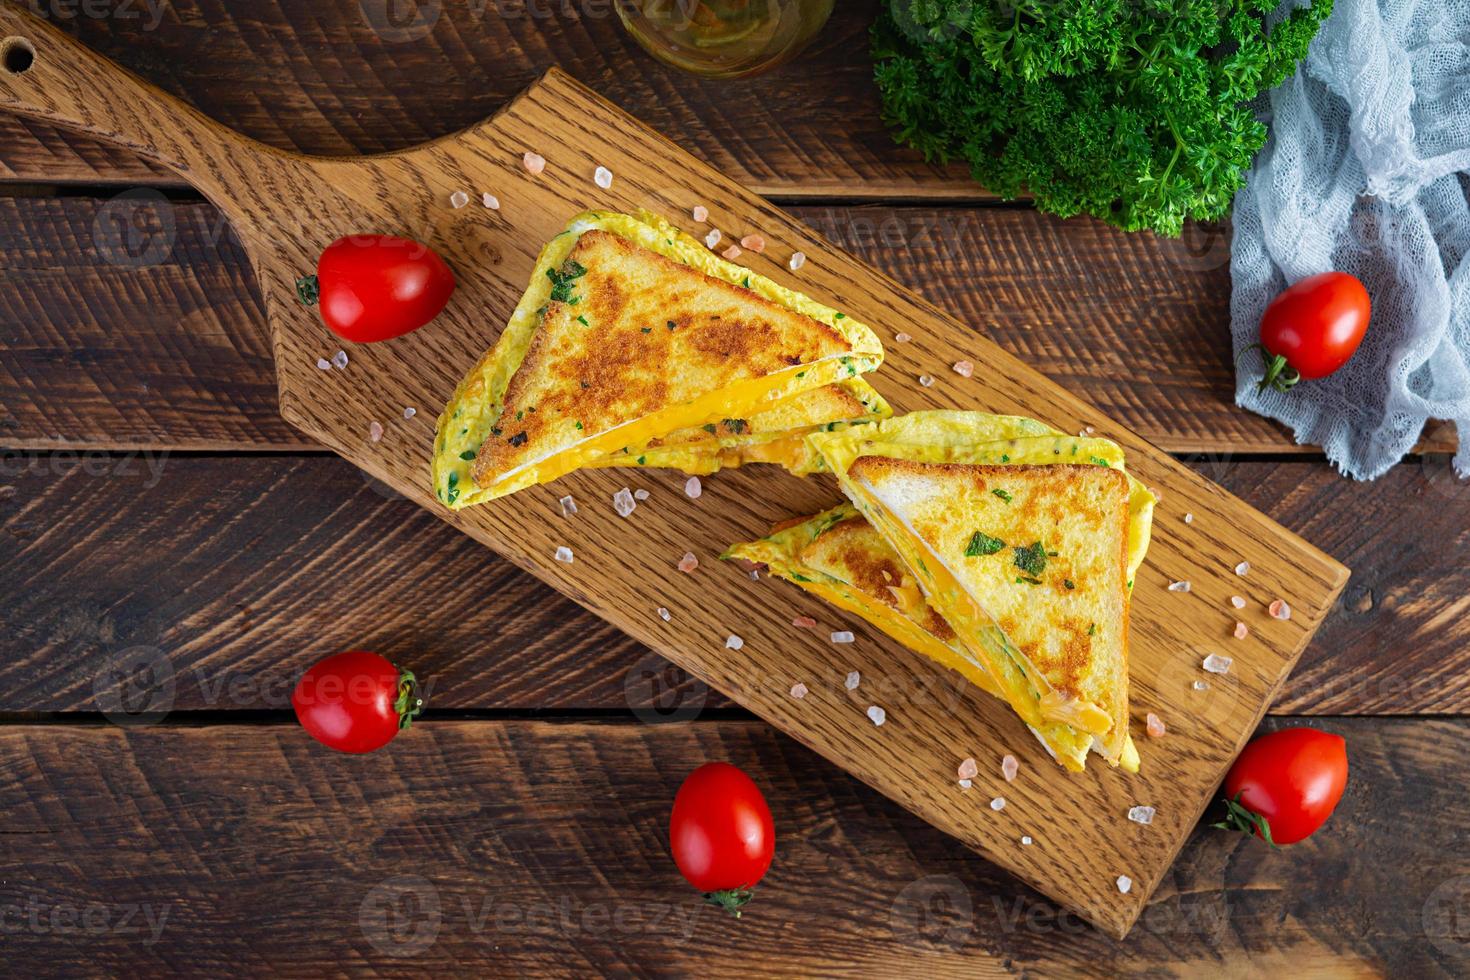 rabanada assada com presunto, ovo, ervas e queijo cheddar. delicioso sanduíche de café da manhã grelhado foto